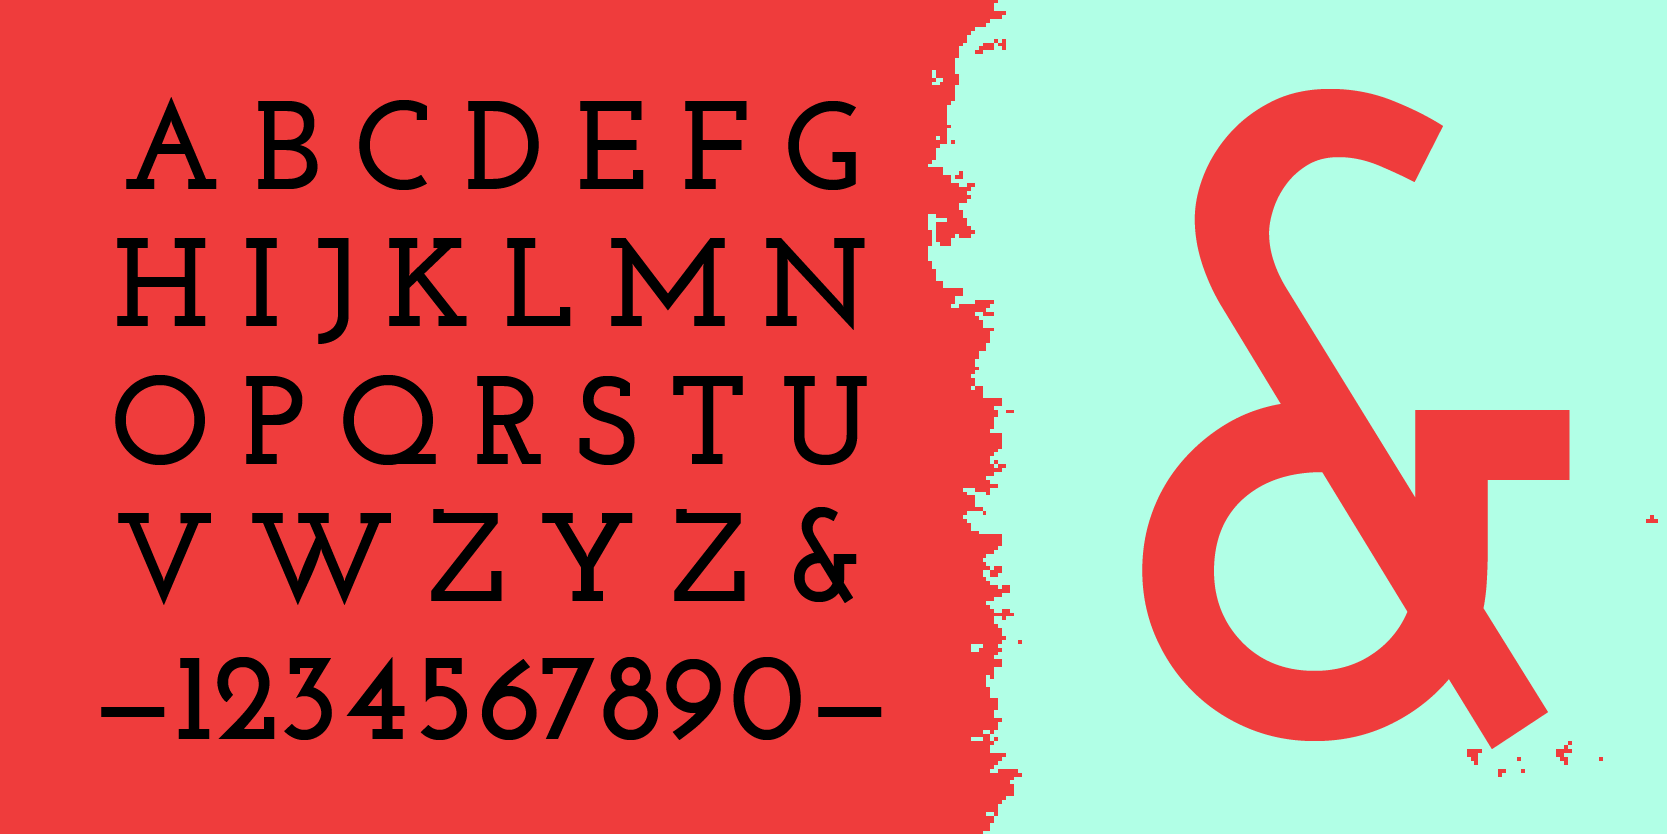 Card displaying Josefin Slab typeface in various styles